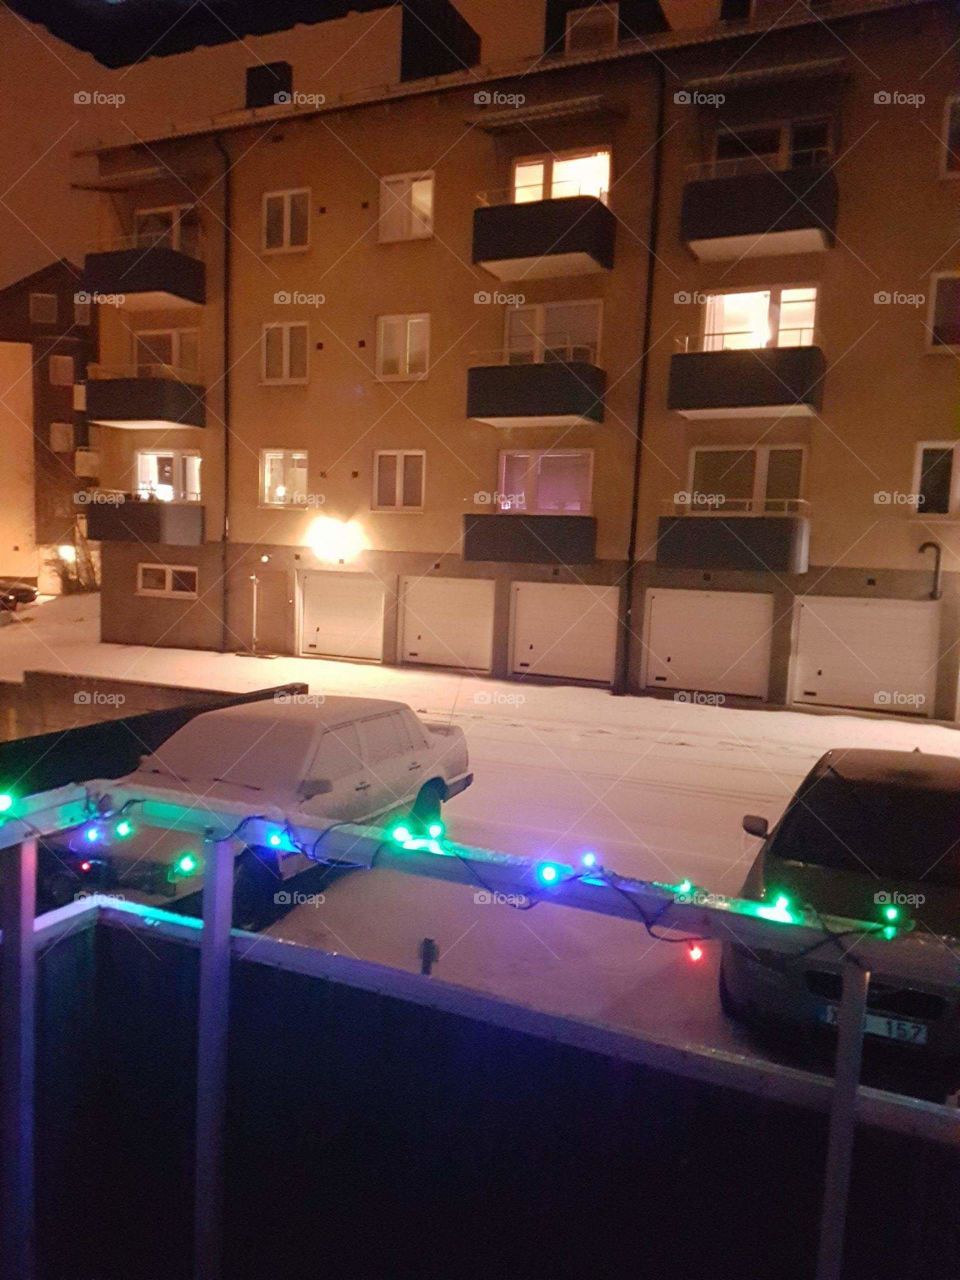 swedish winter with snow